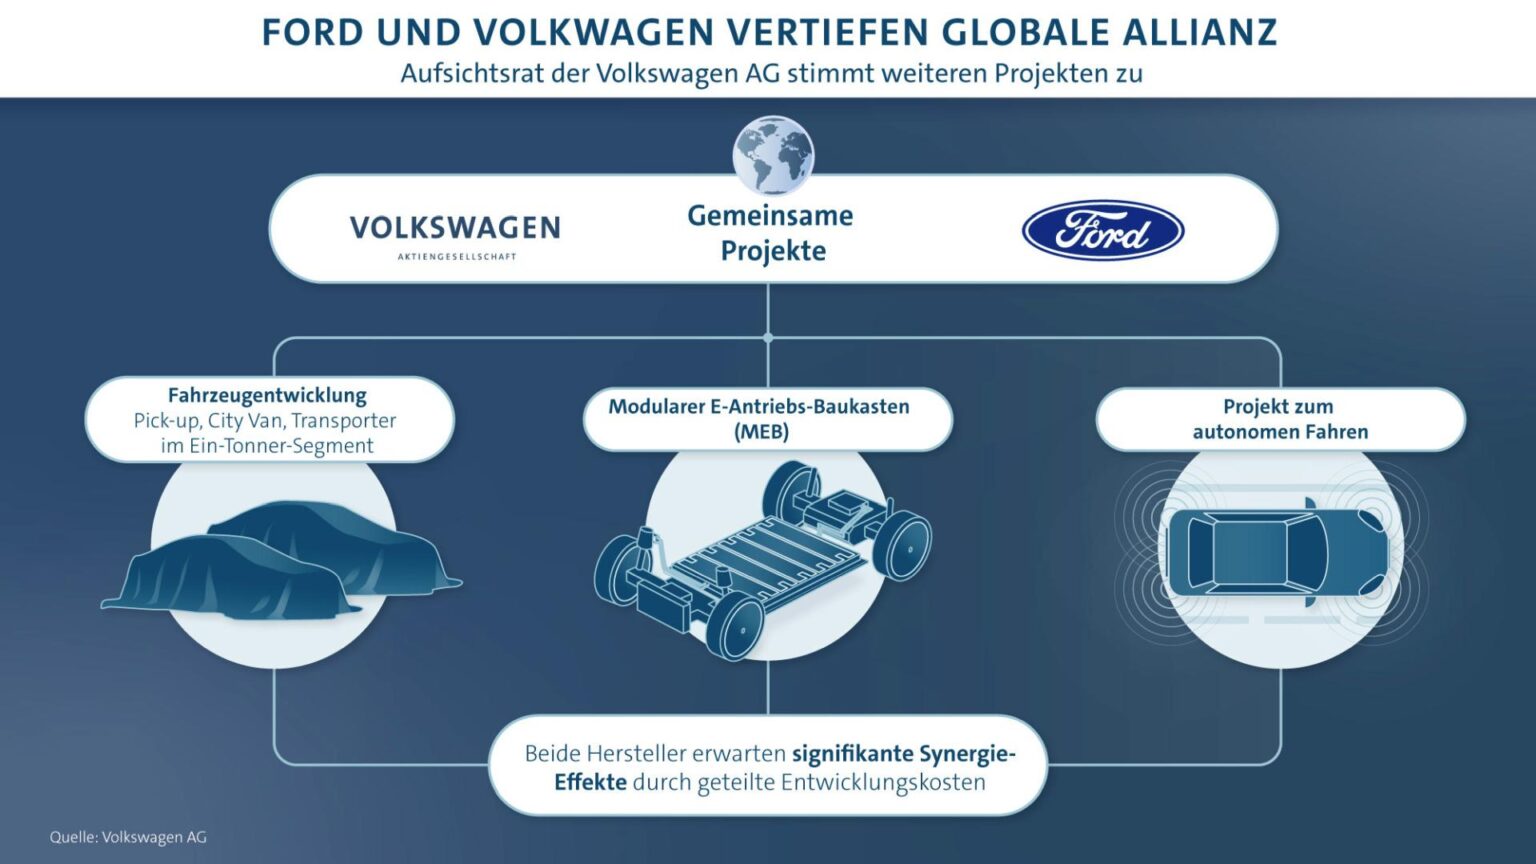 Globale Ford – Volkswagen Allianz nimmt Form an